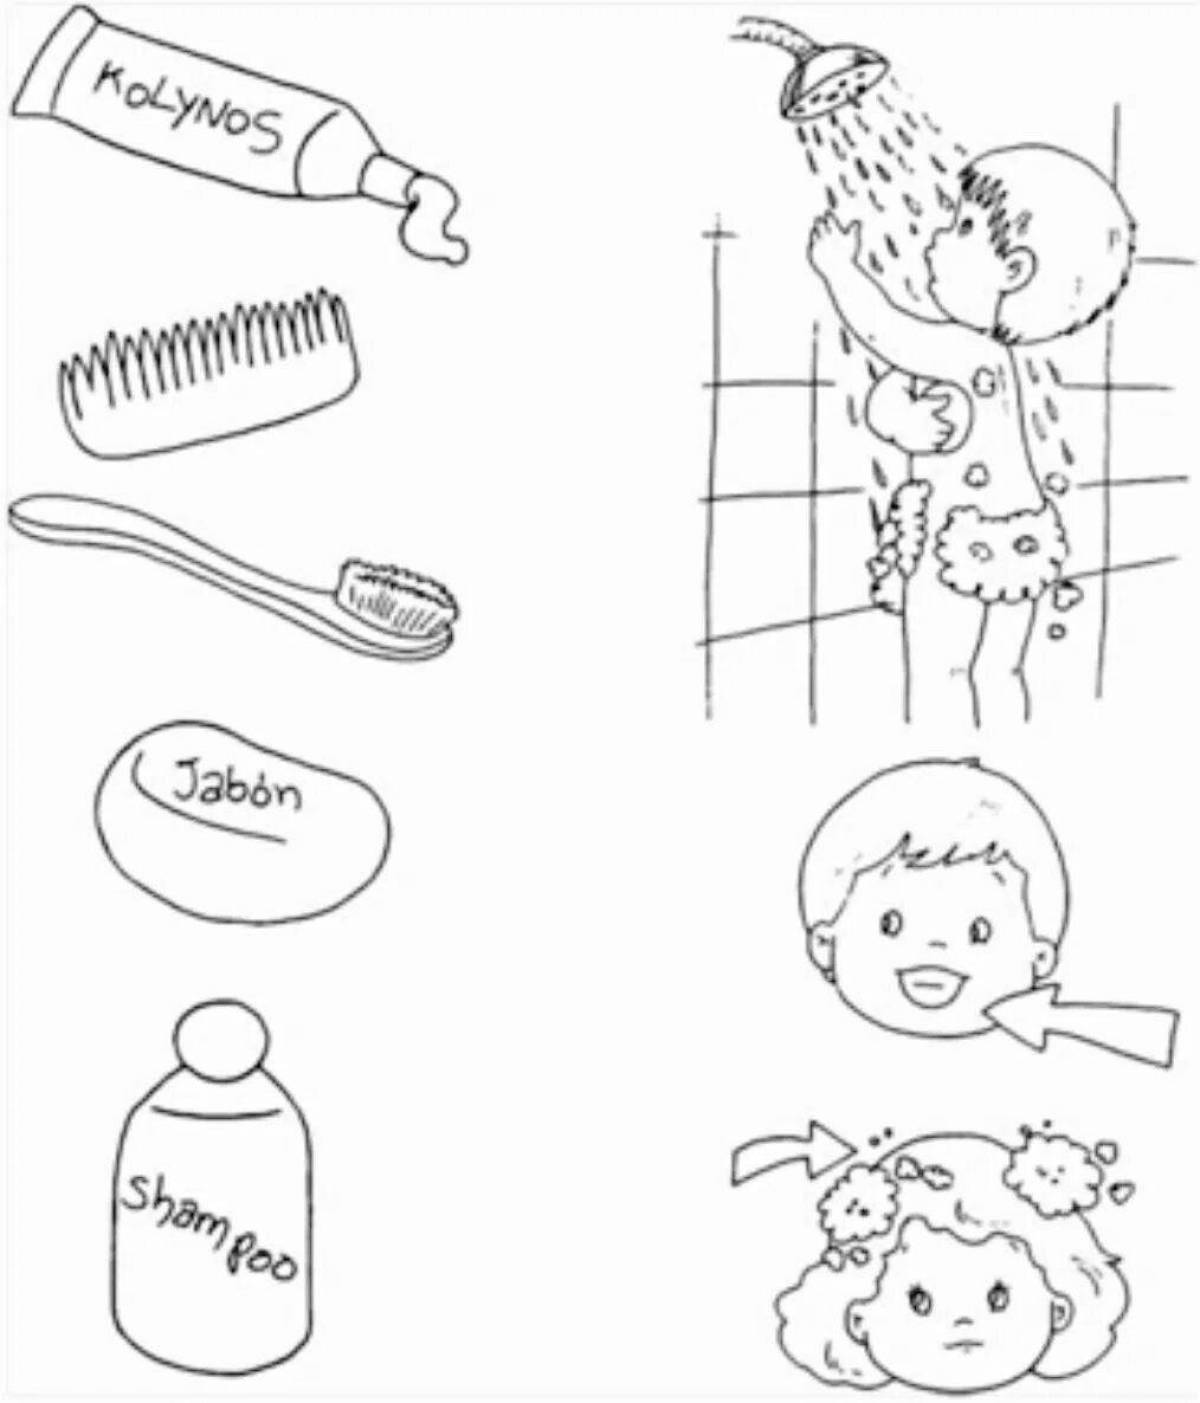 Interesting personal hygiene items for children